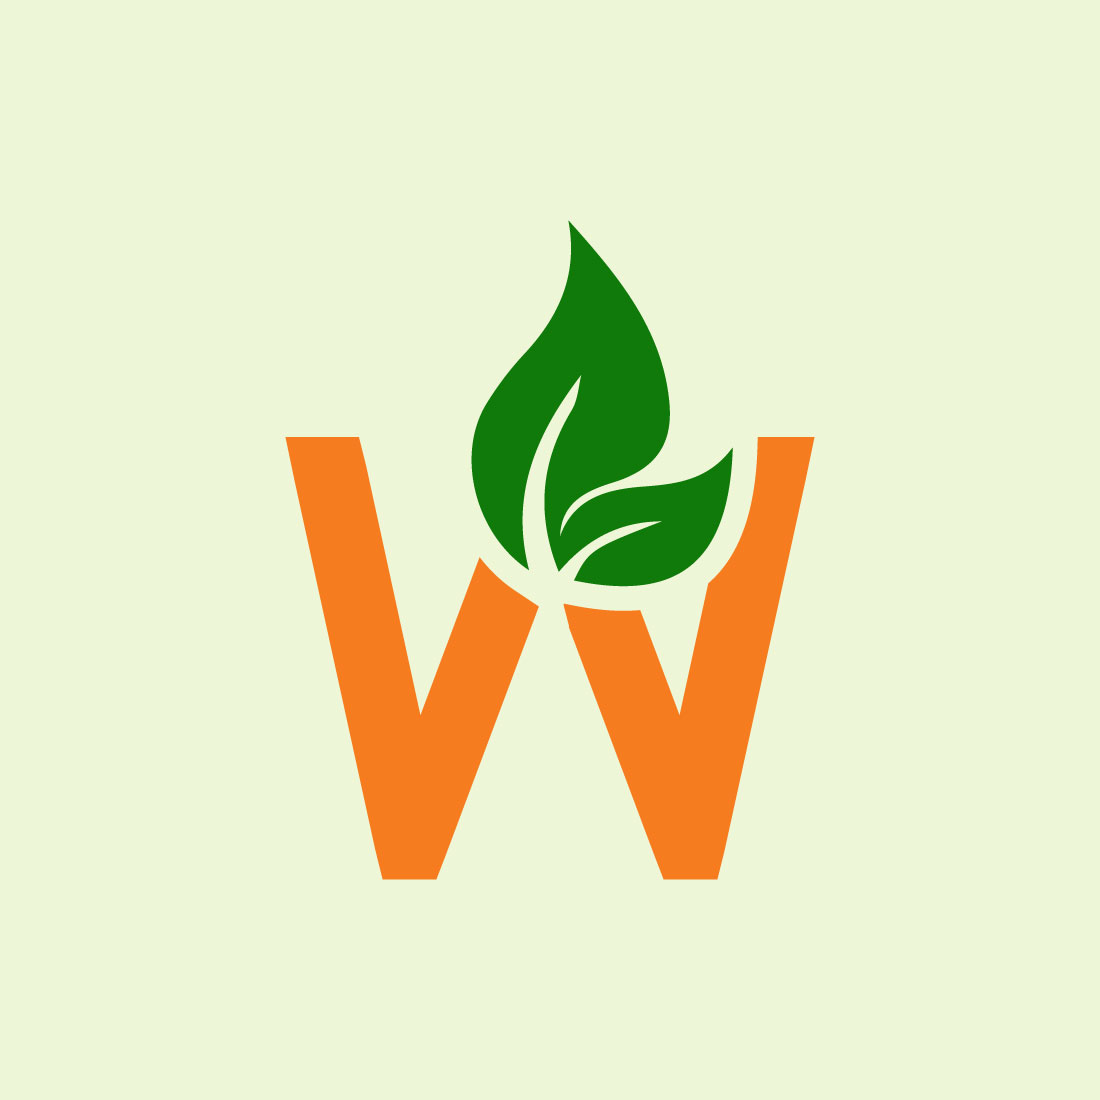 Free W organic logo cover image.